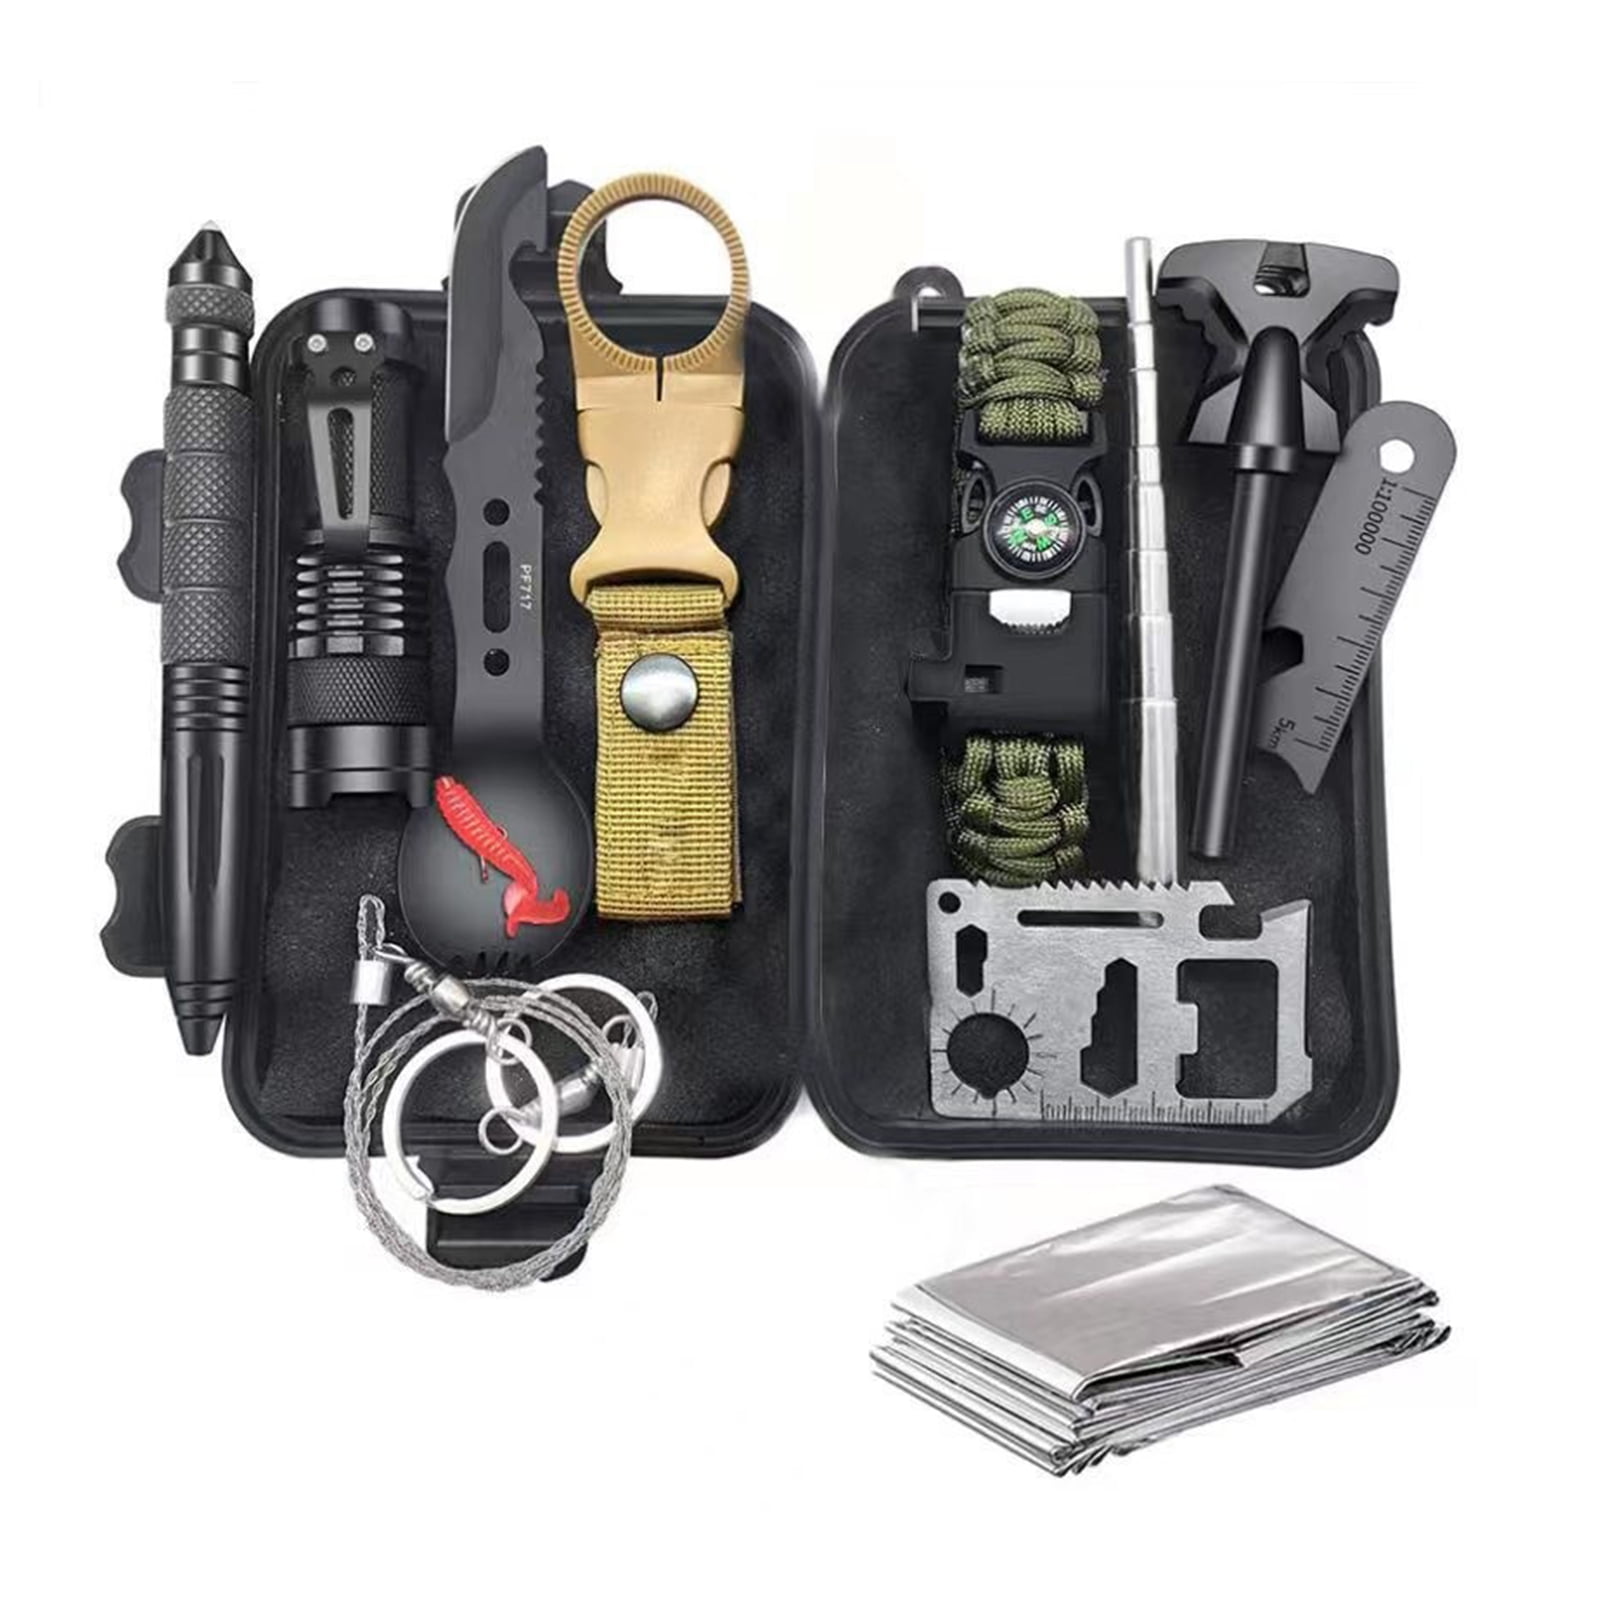 Abpir318 PCS Emergency Survival Kit, Survival Gear and Equipment